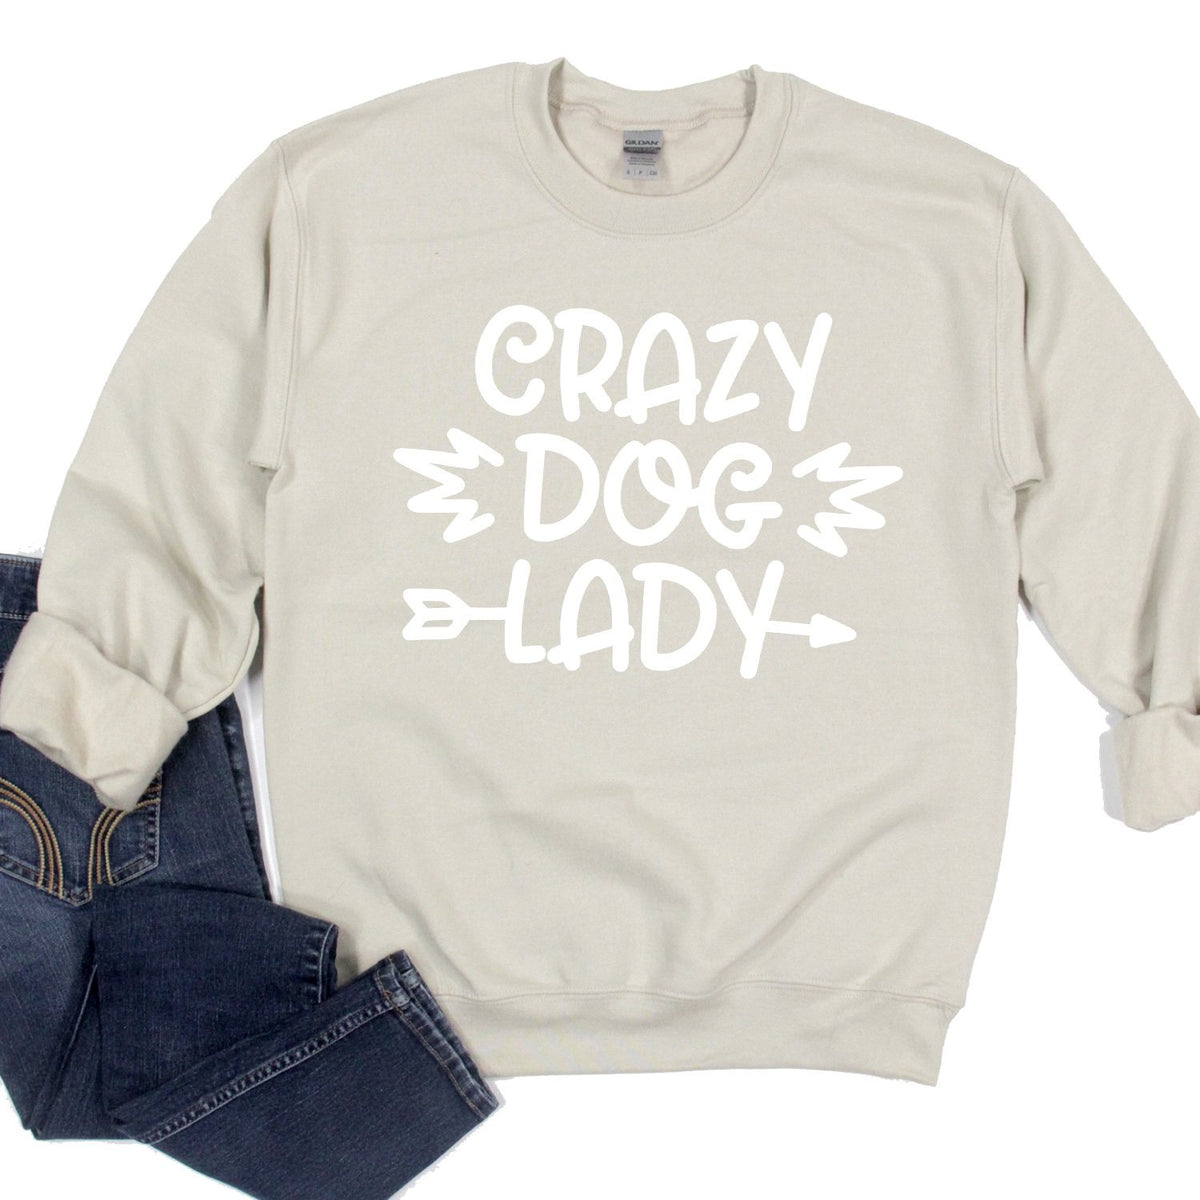 Crazy Dog Lady - Long Sleeve Heavy Crewneck Sweatshirt